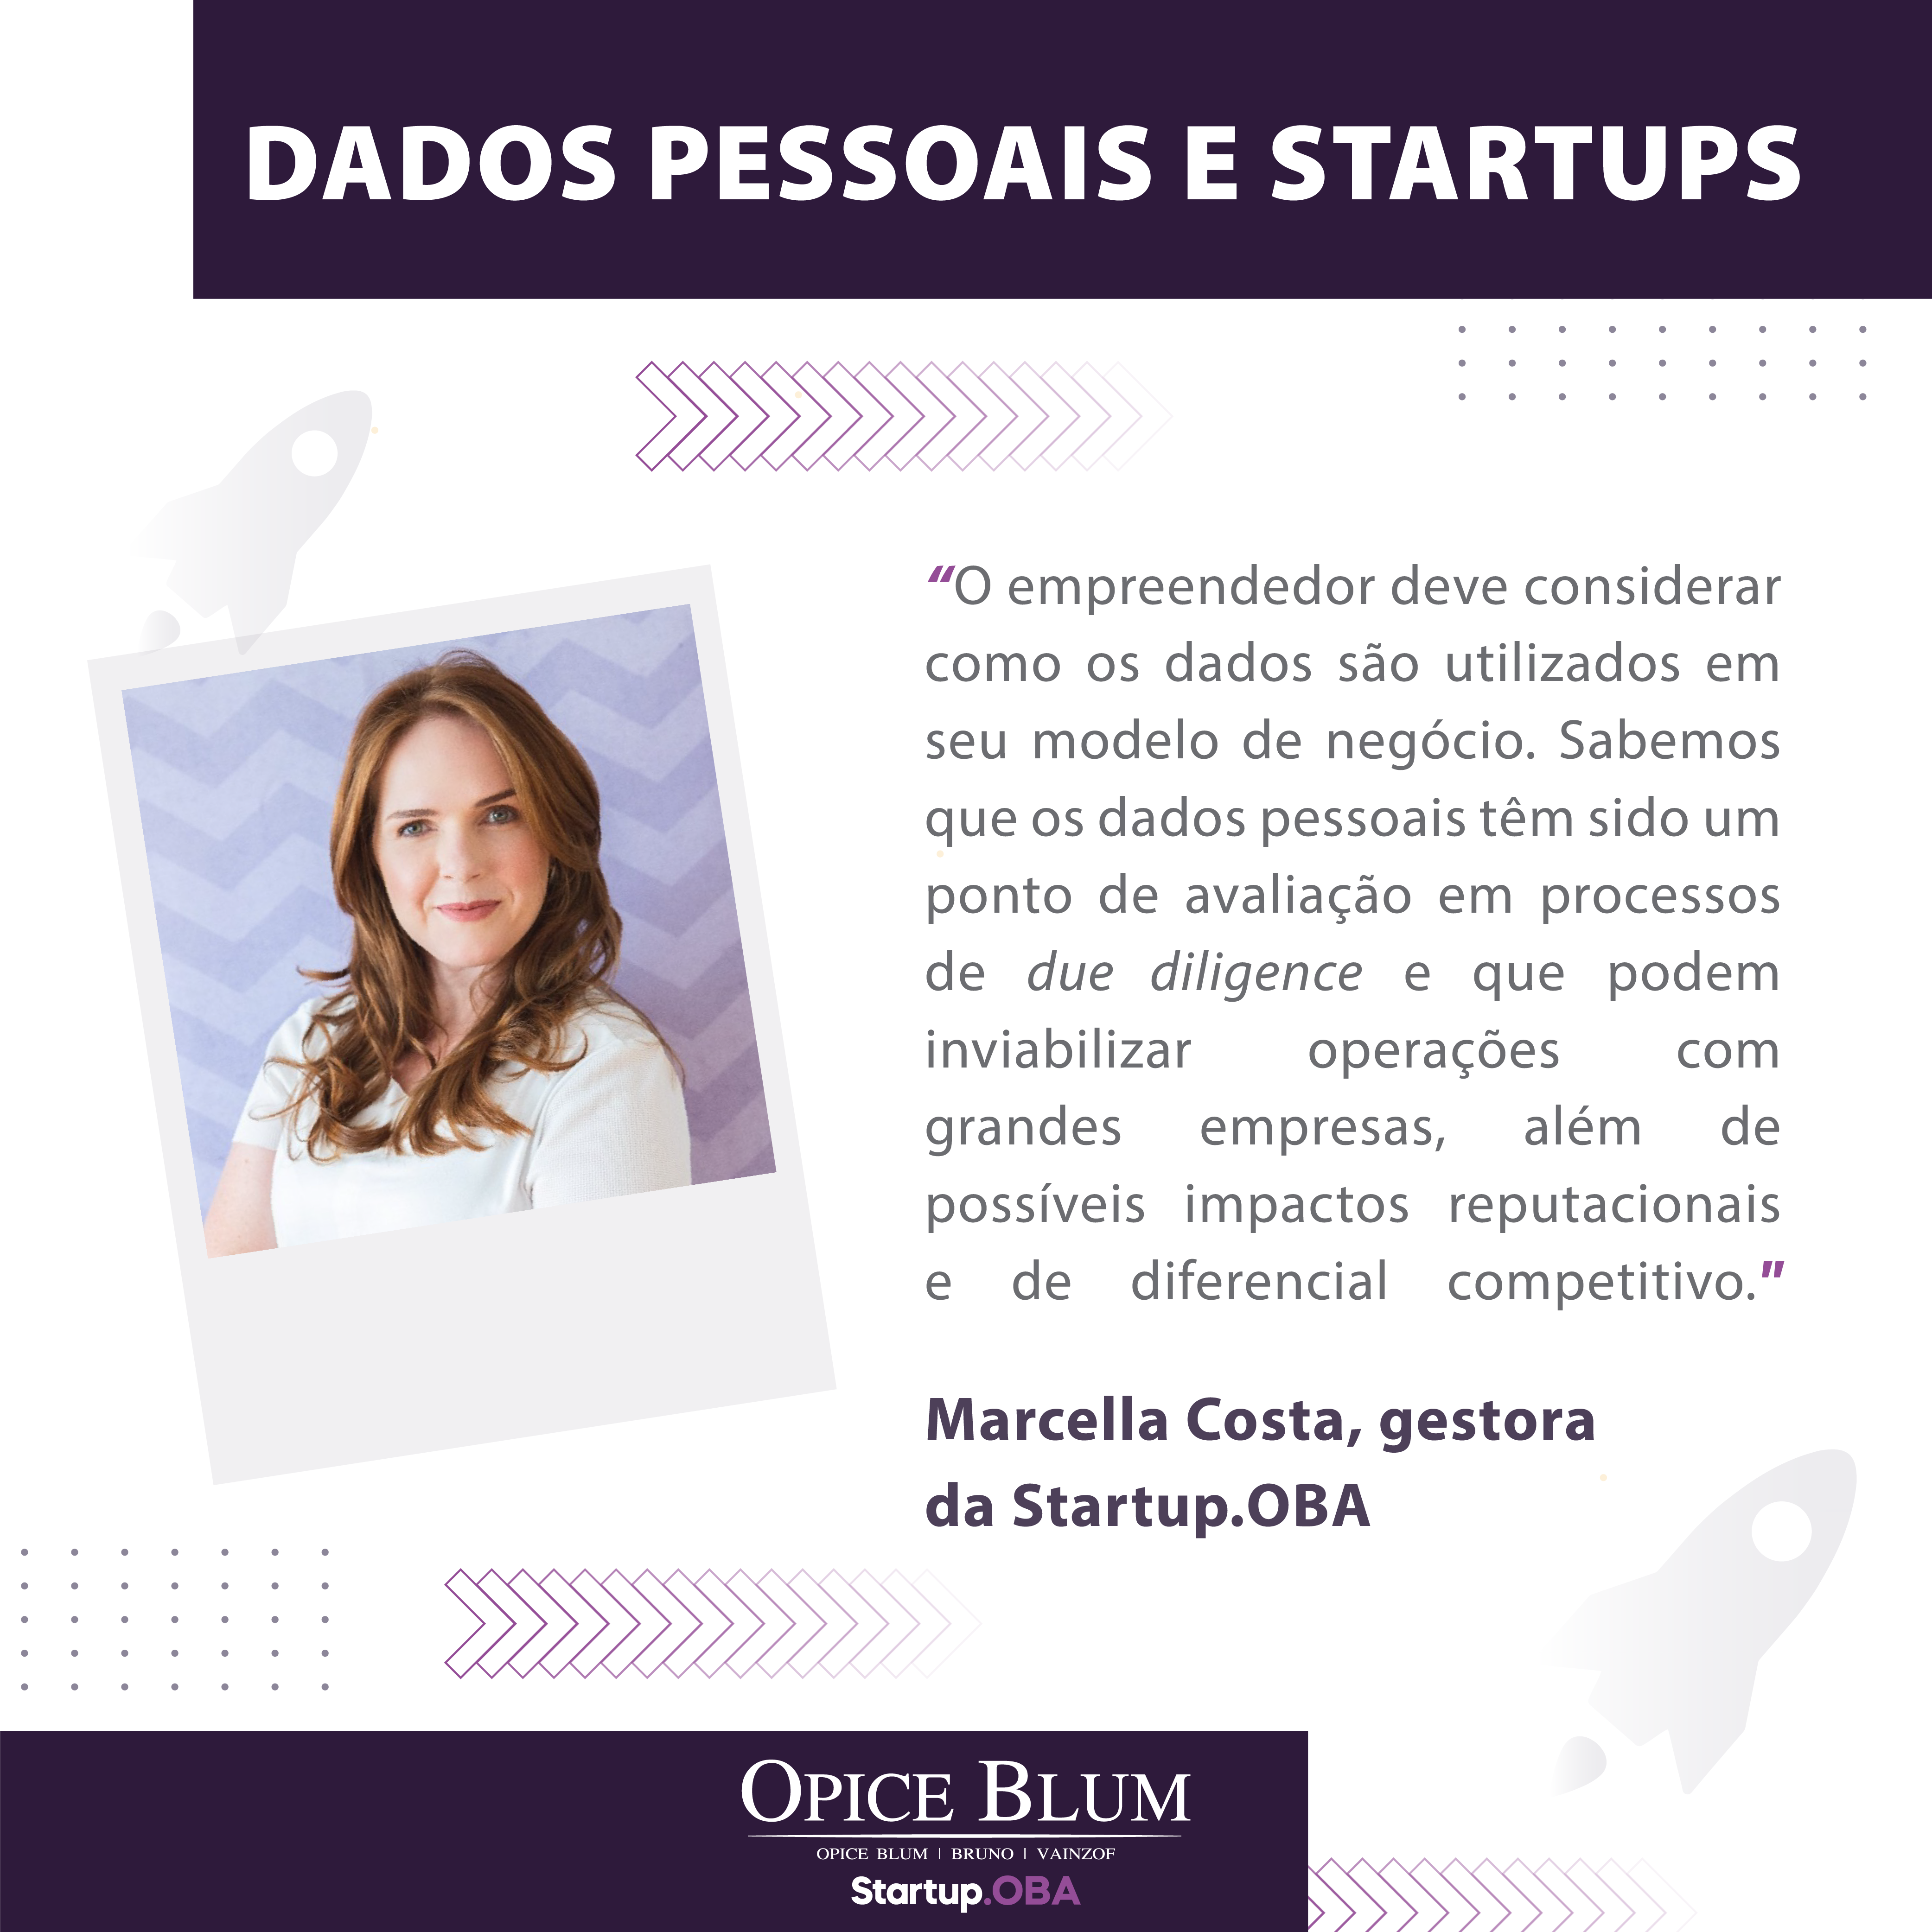 startup rio innovation_Noticia Startup cópia